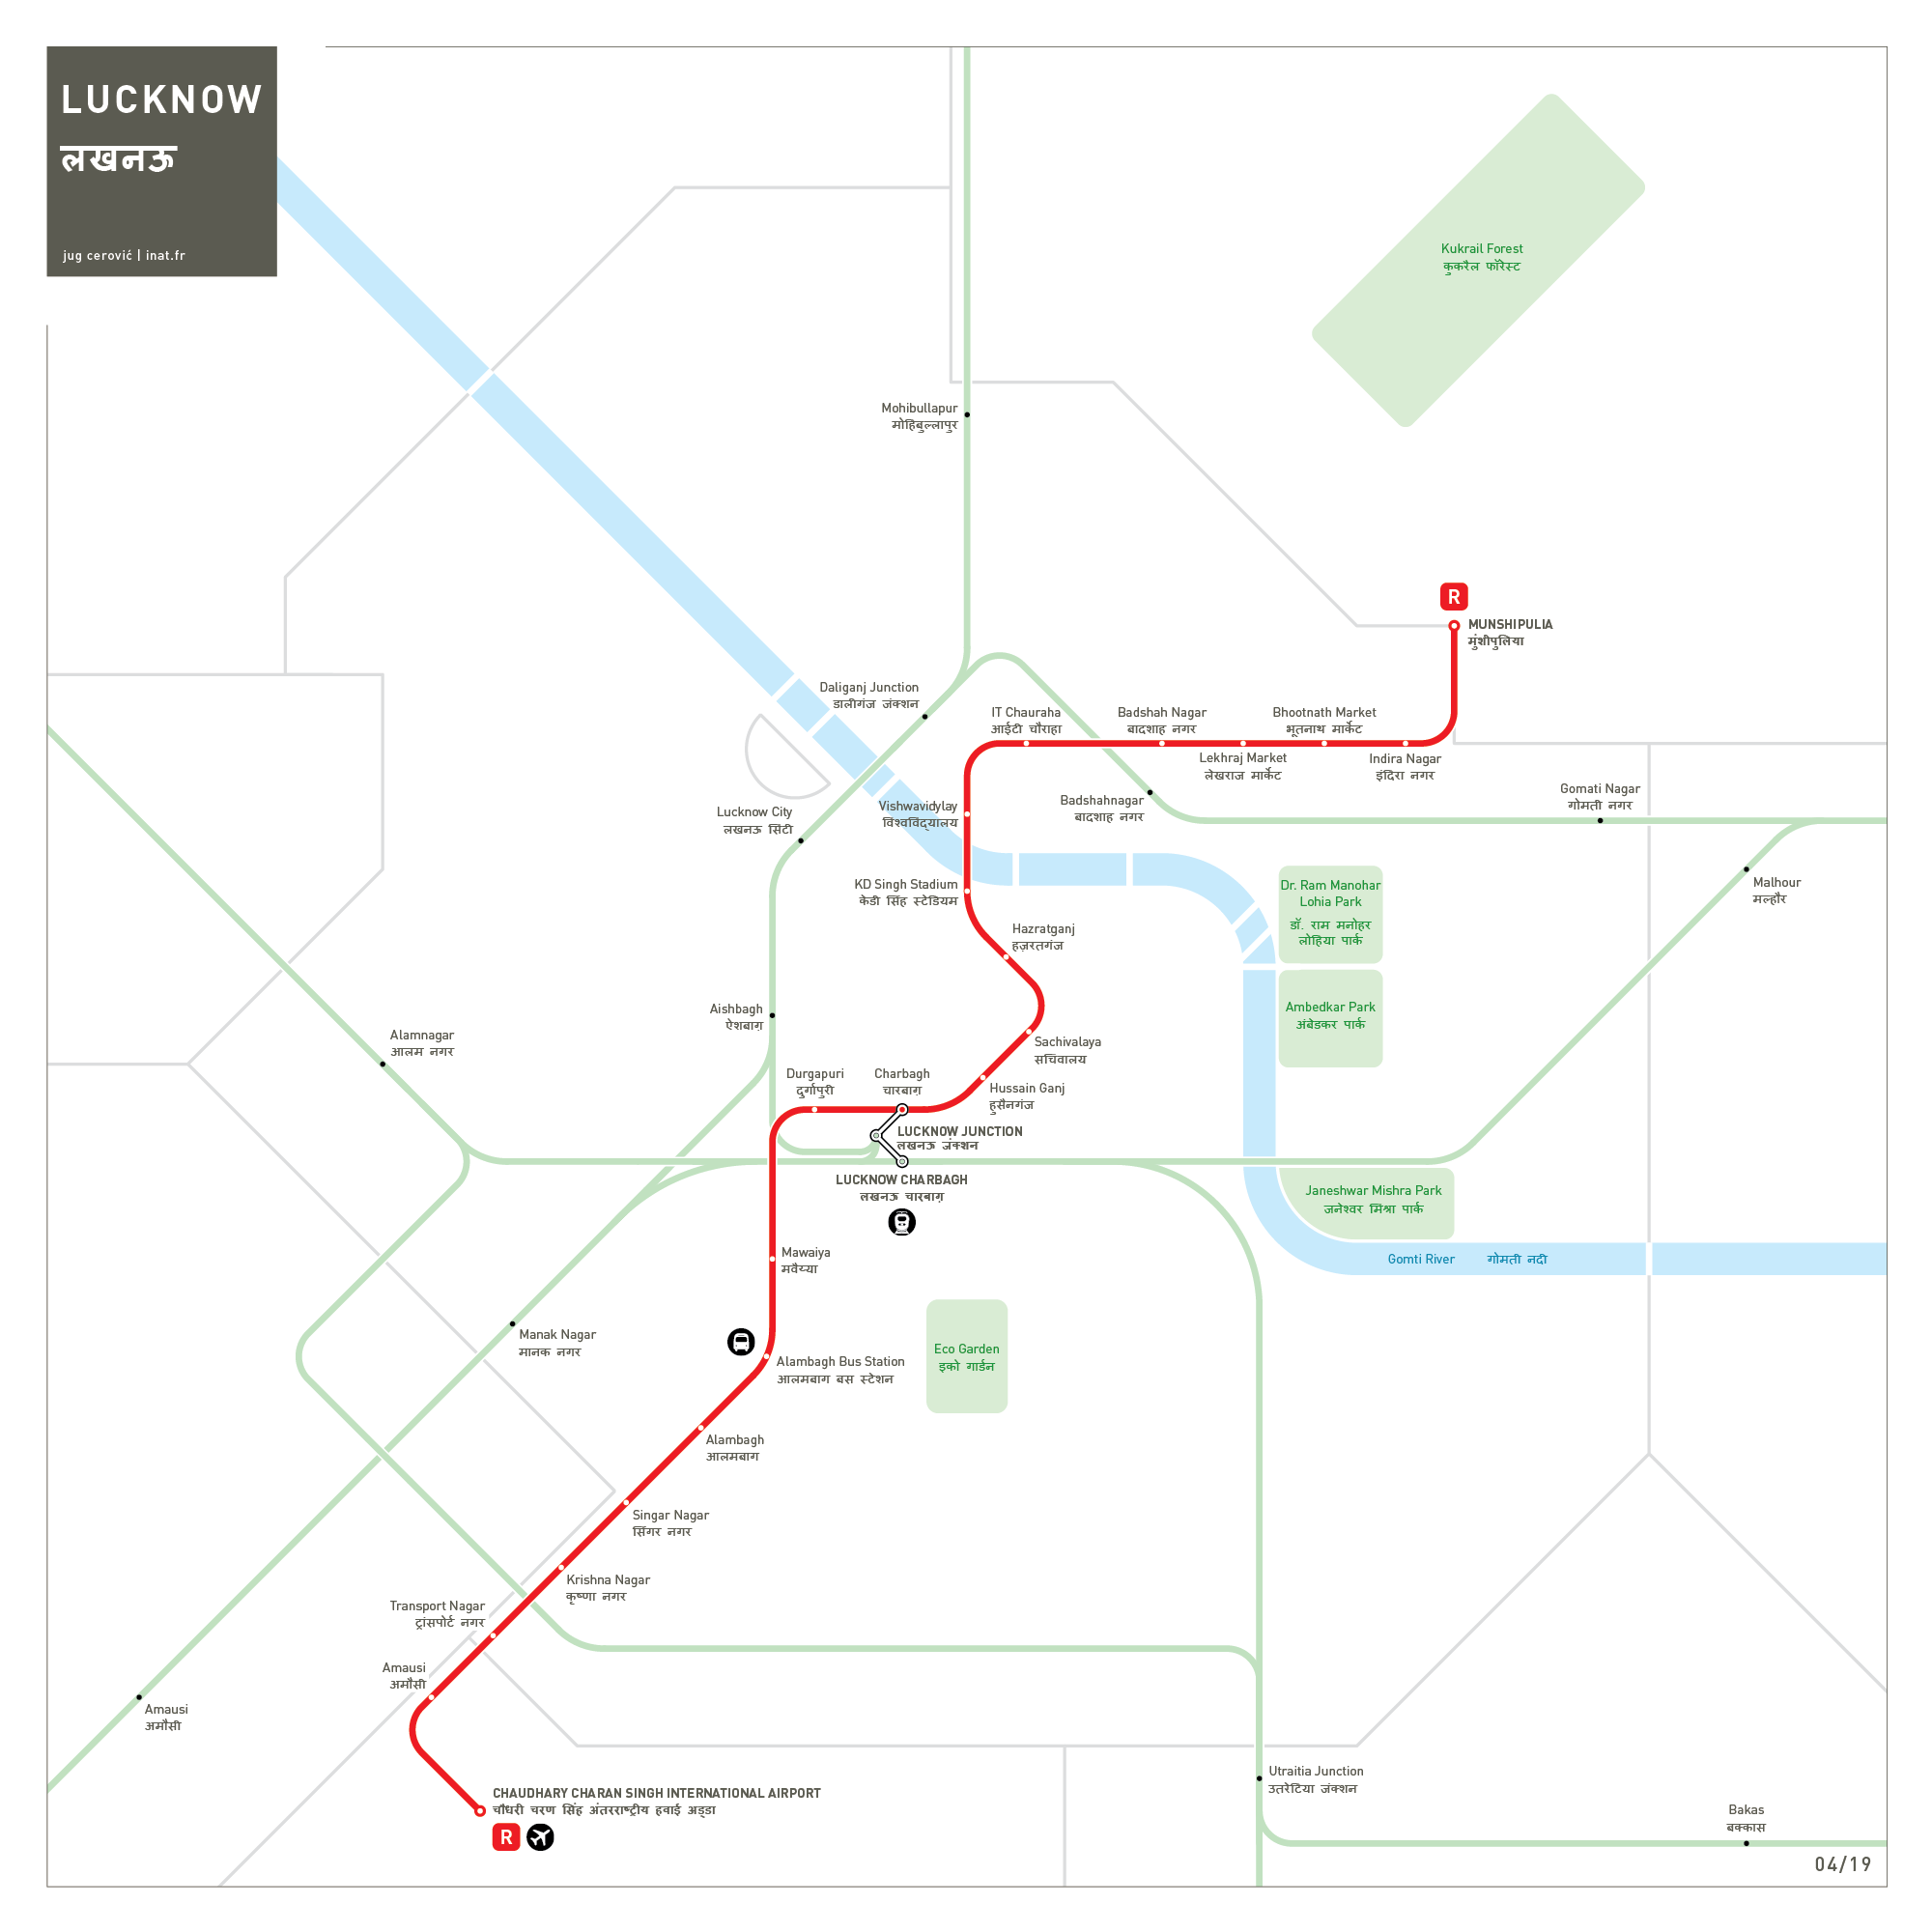 Lucknow metro map